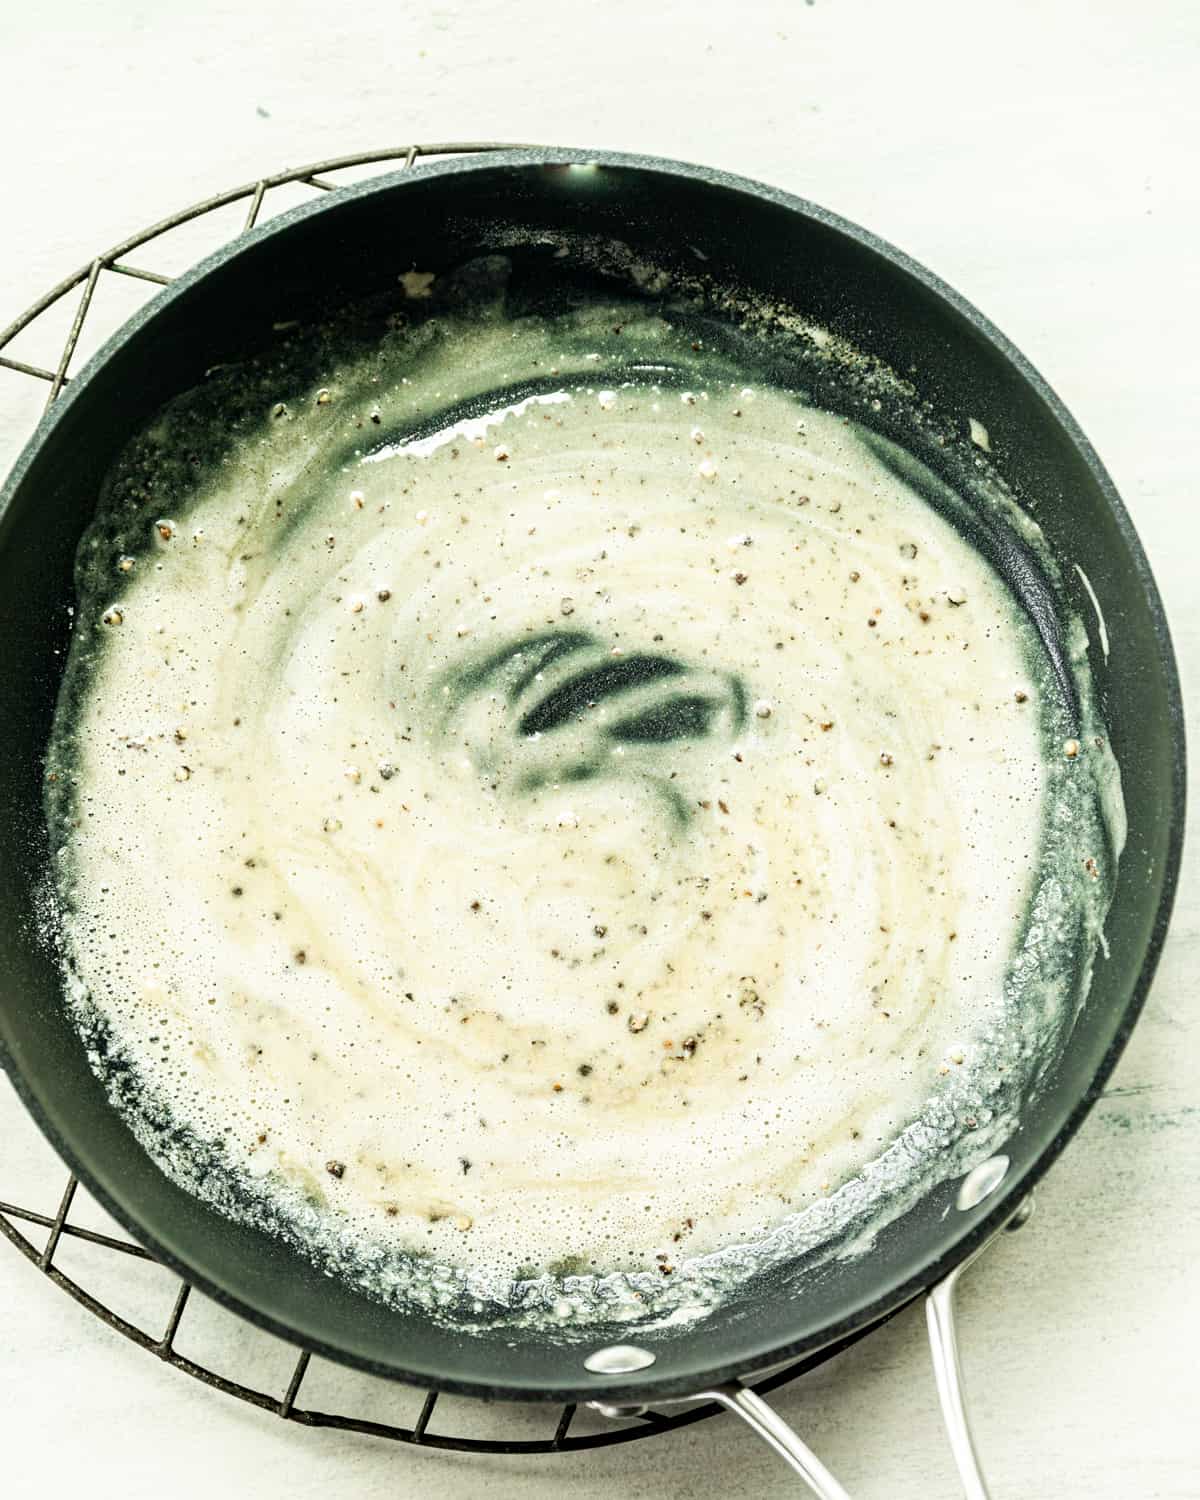 flour, milk, pepper, and pecorino cheese in a pan.